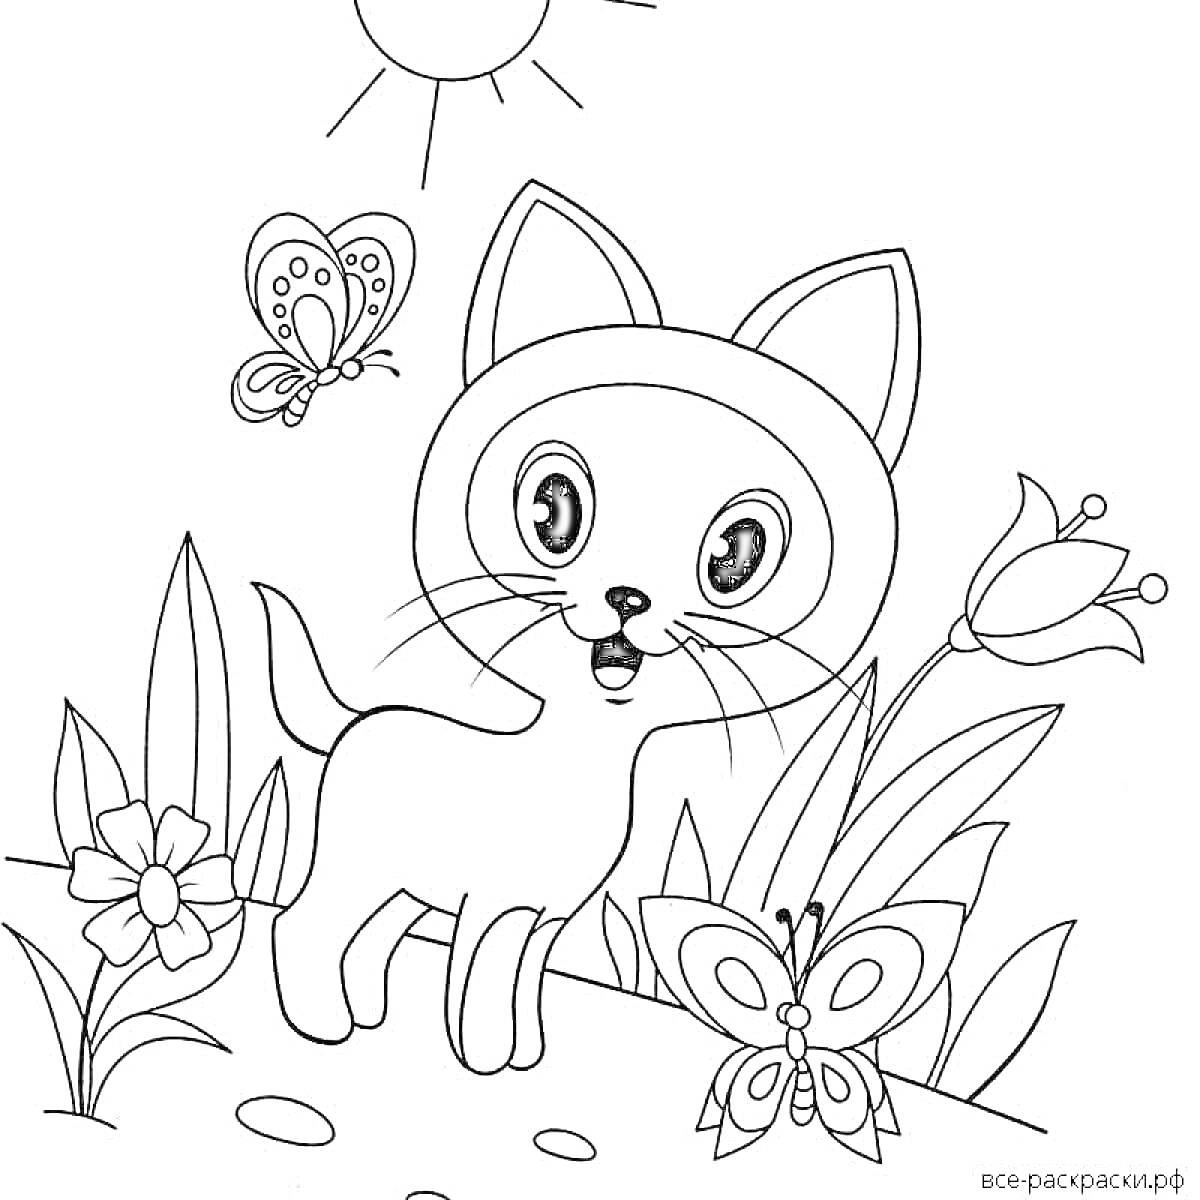 Котёнок Гав с цветами, бабочками и солнцем